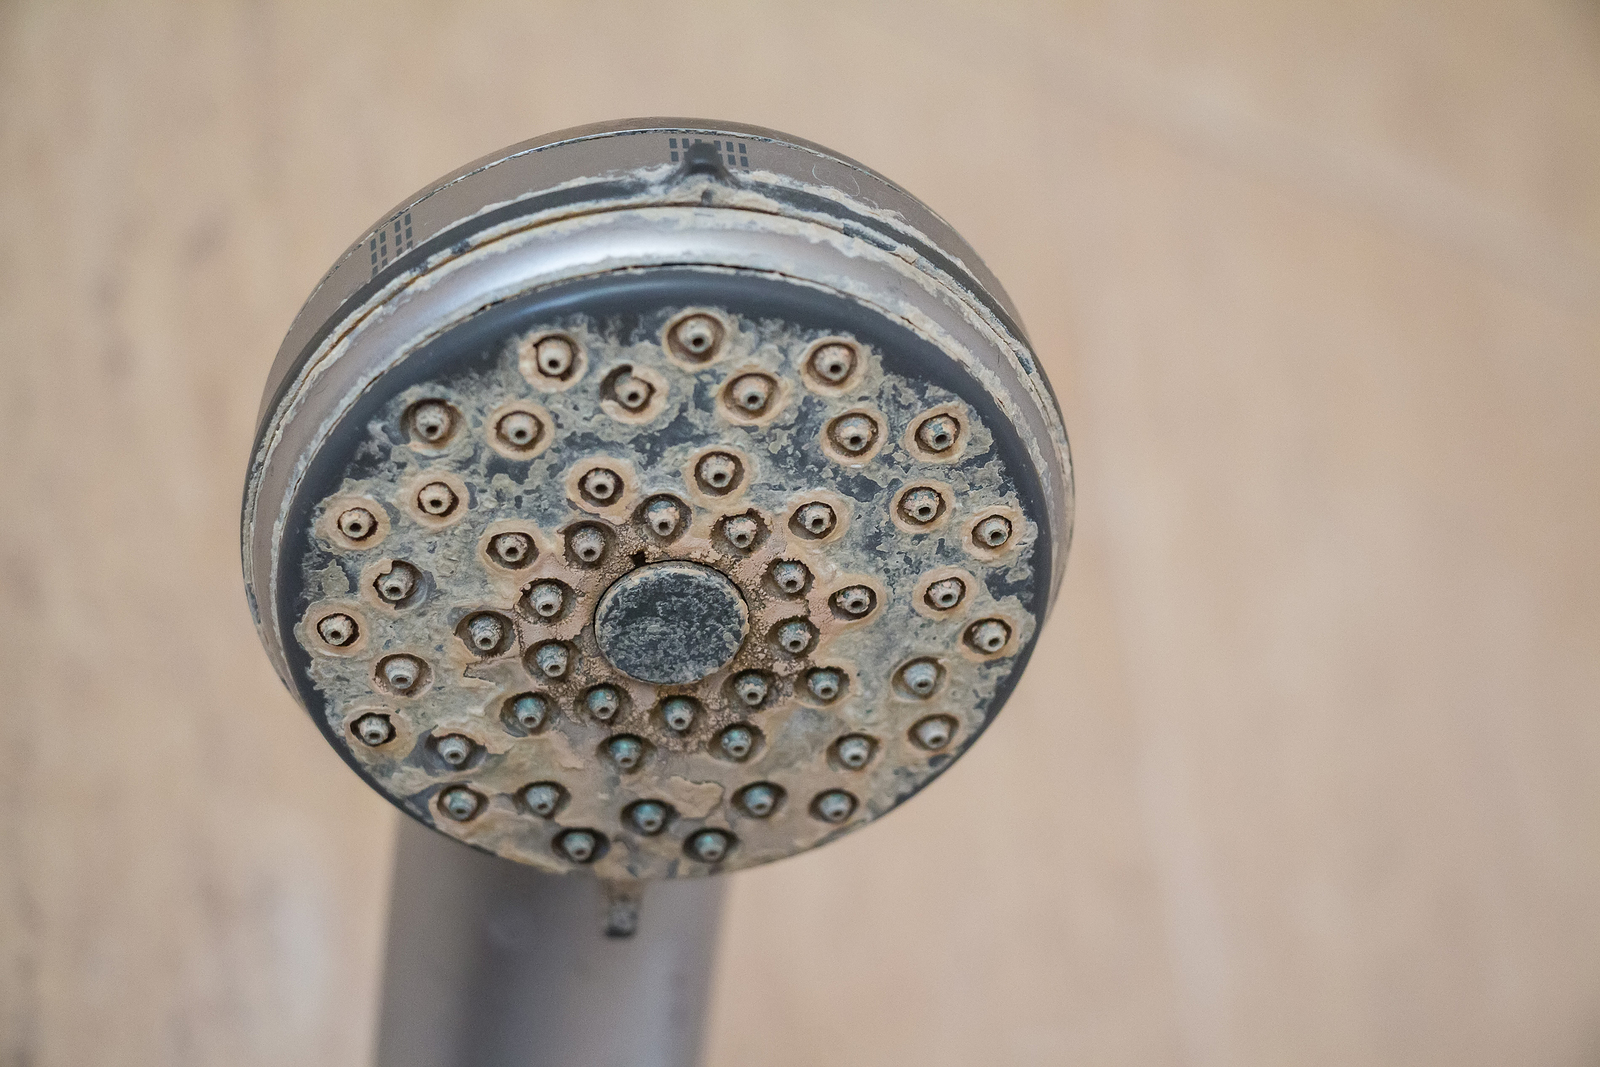 hard water limescale buildup on shower head